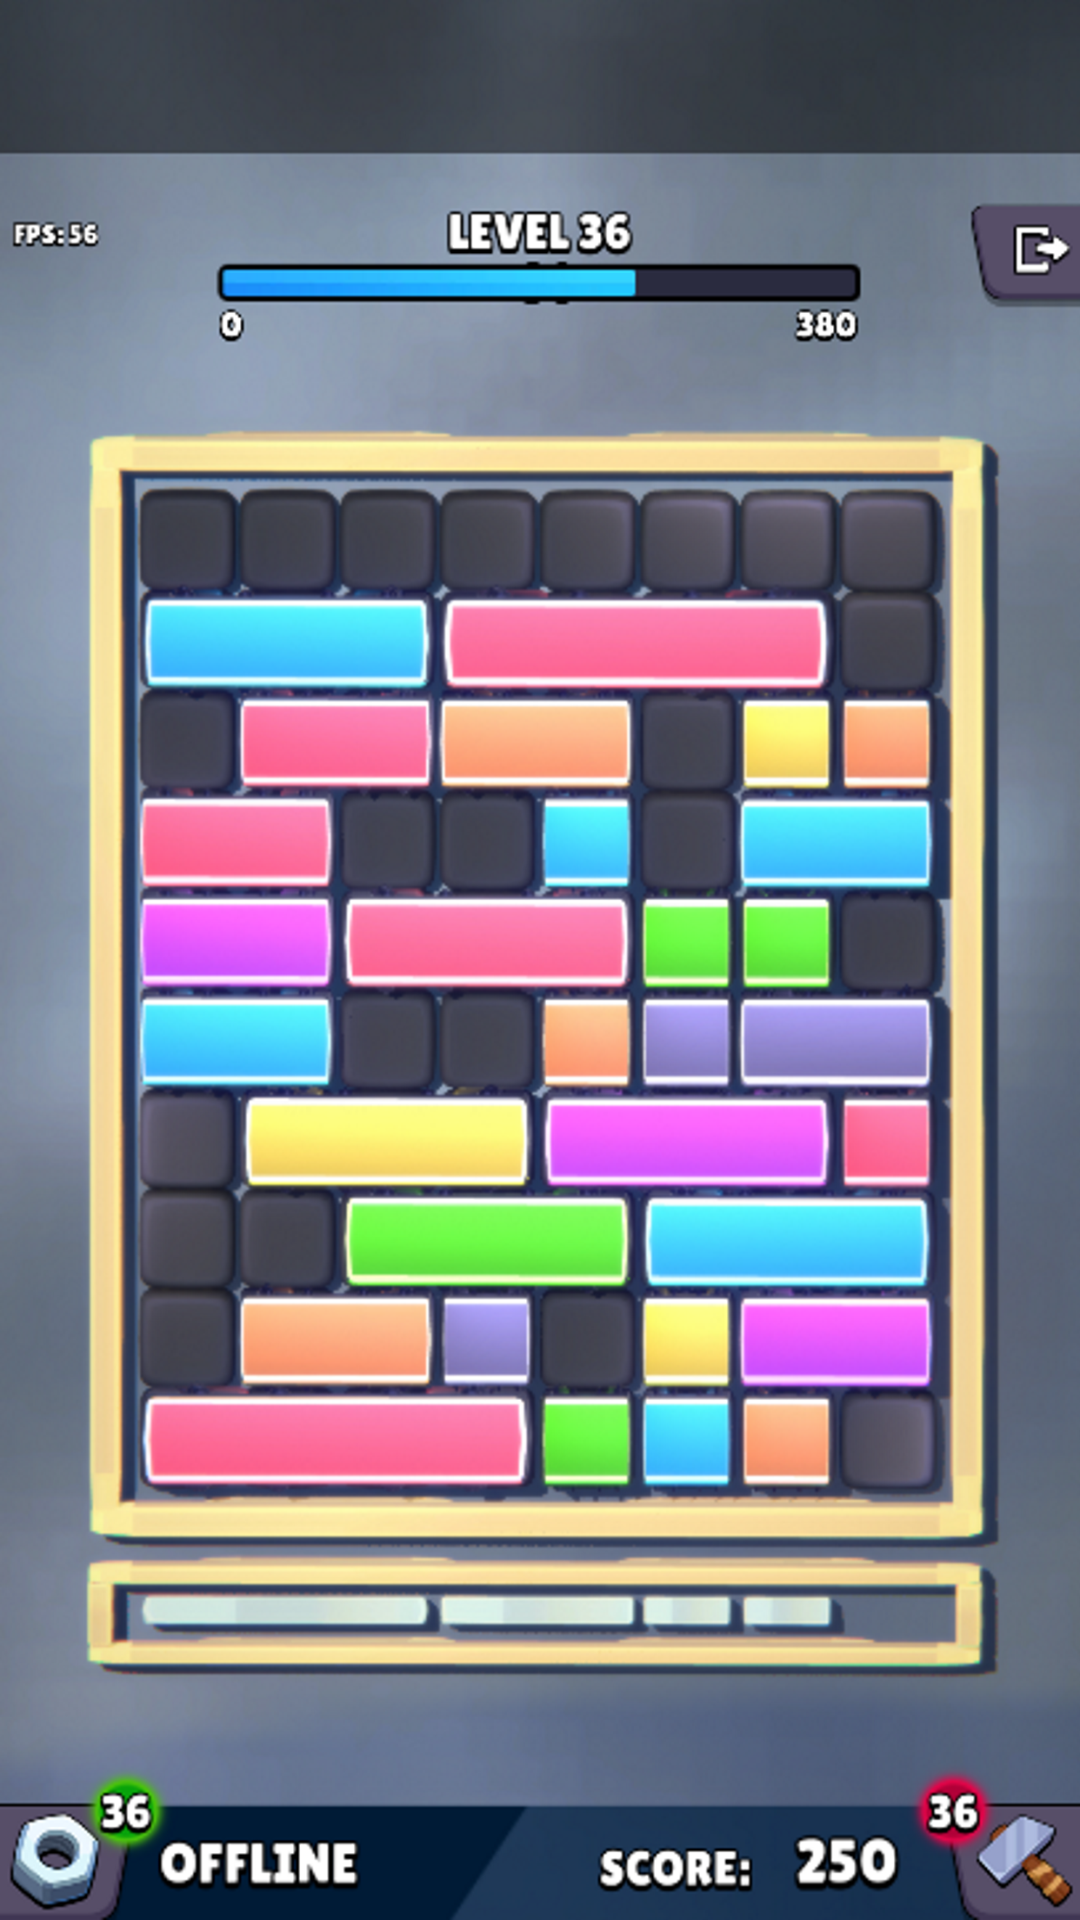 Sliding Block Puzzle Game - Free Download